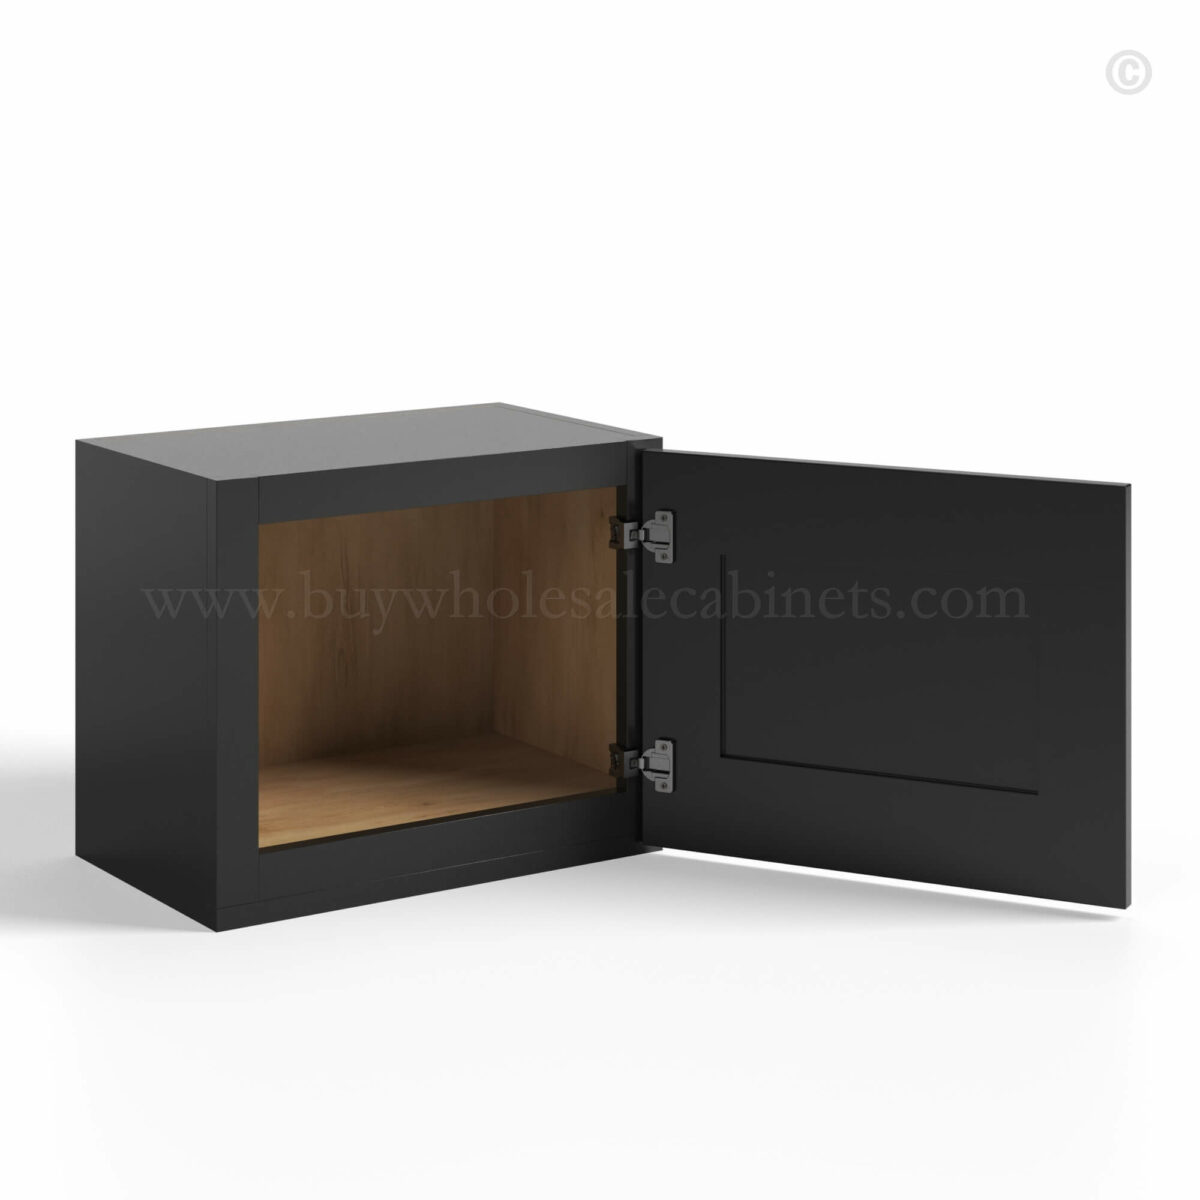 Black Shaker Single Door Wall Cabinet, rta cabinets, wholesale cabinets